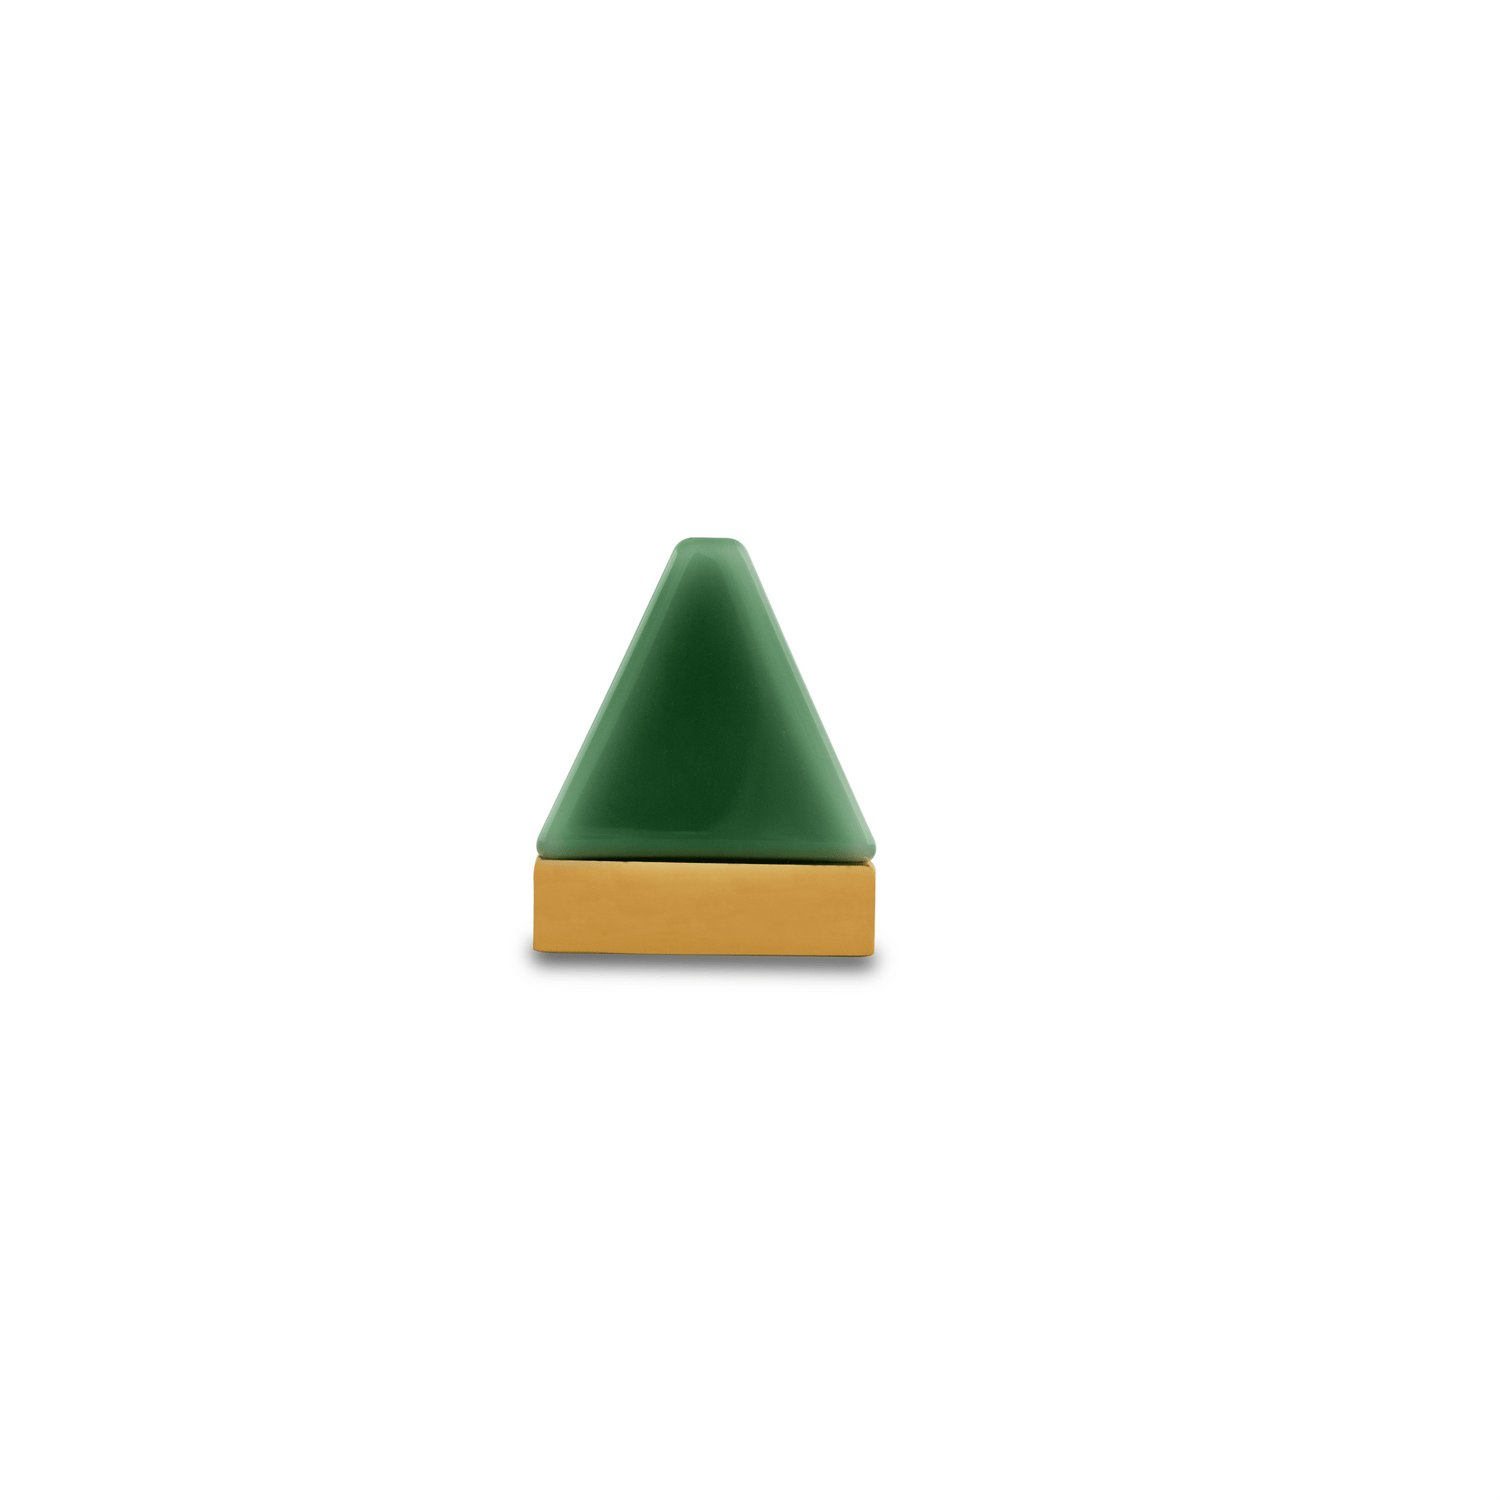 Gable Knob Knob 36mm / Green / Zinc Alloy - M A N T A R A